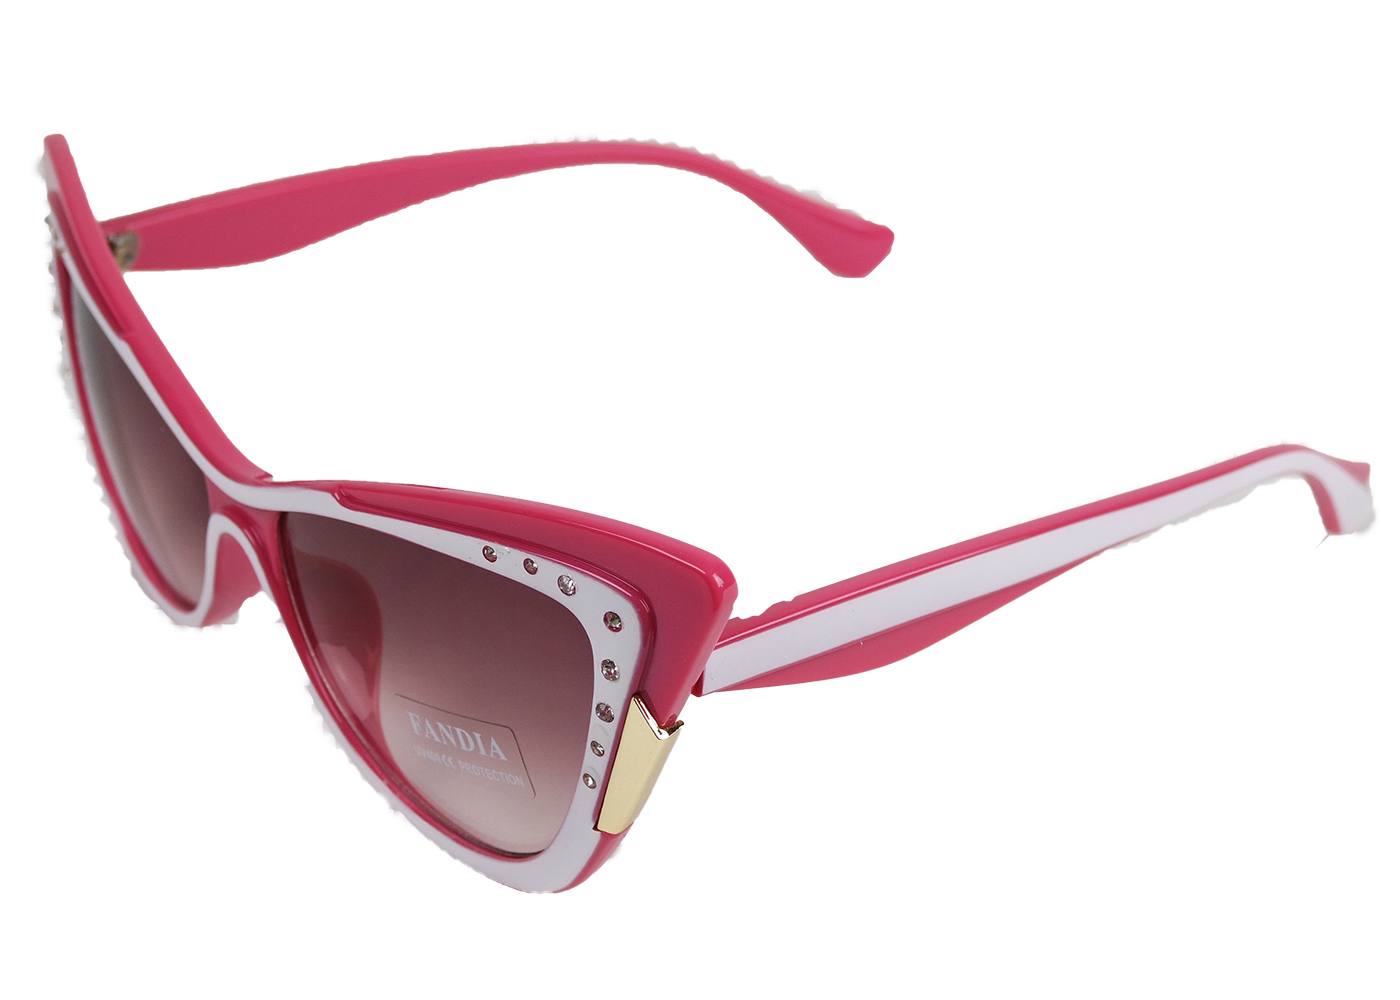 Sonnenbrille im Cadilack Retro Style rosa